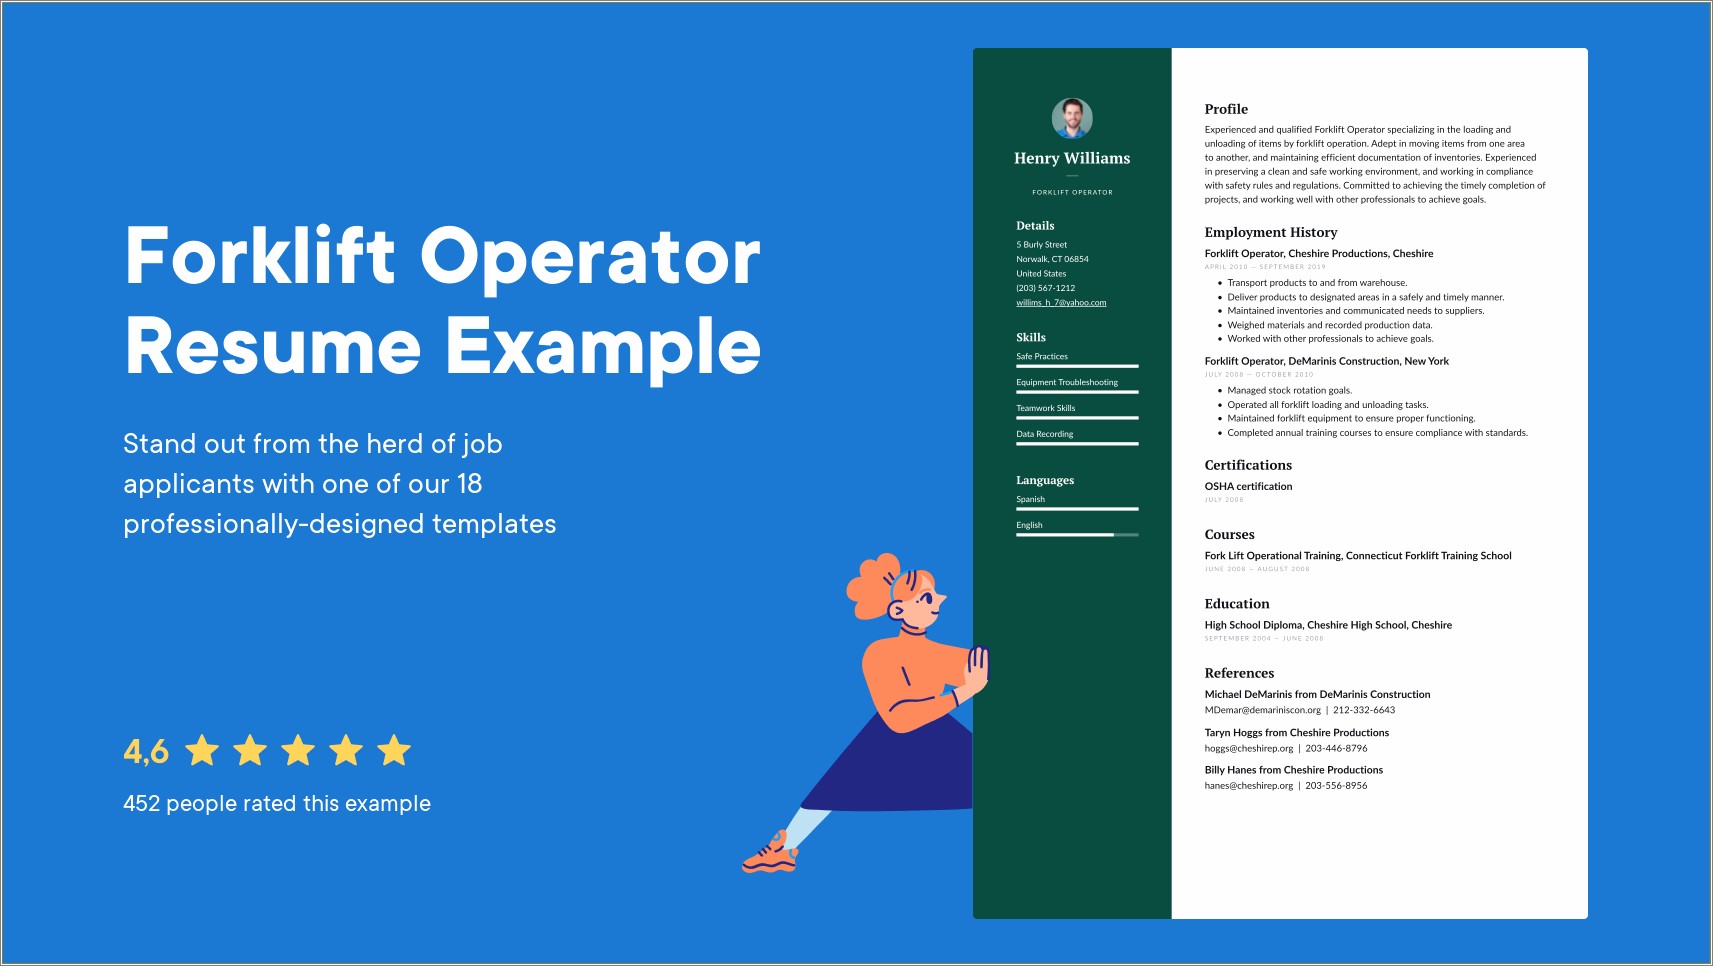 Sample Resume Objectives For Forklift Operator